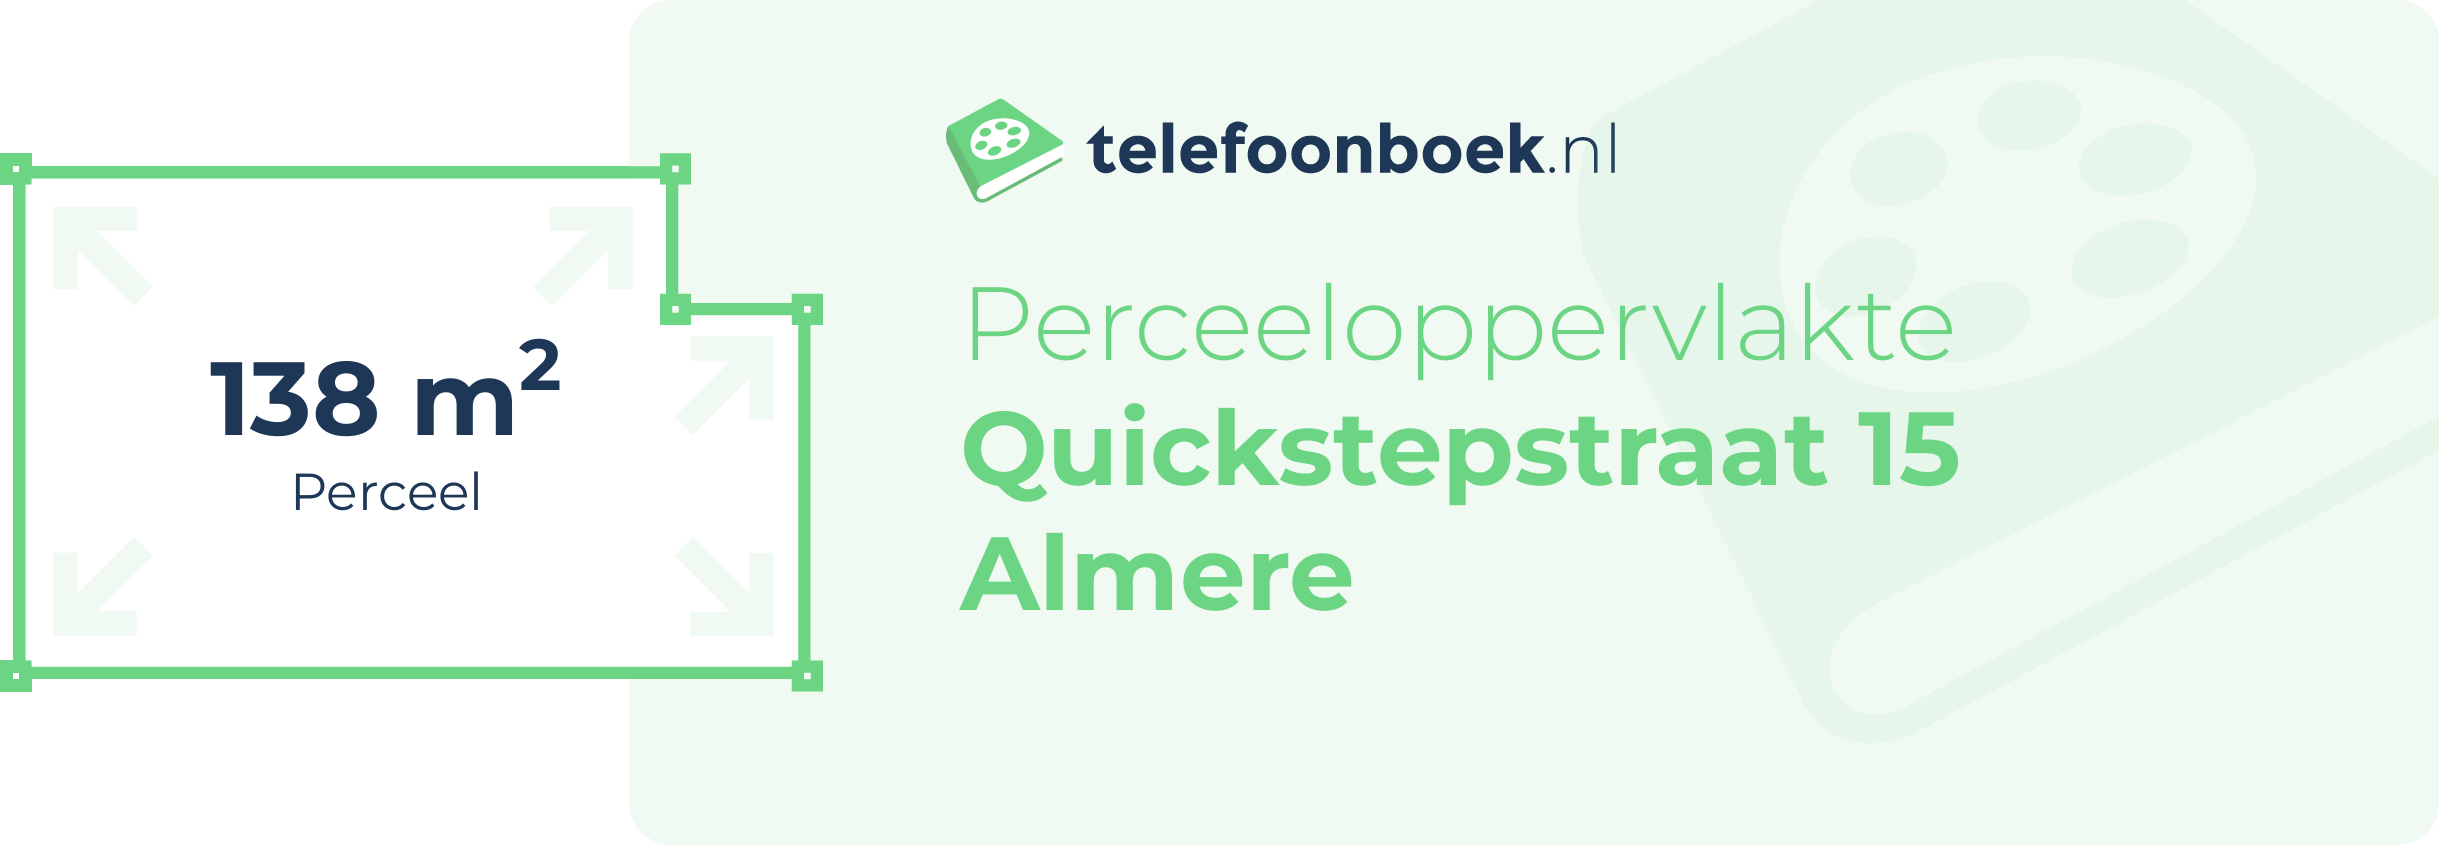 Perceeloppervlakte Quickstepstraat 15 Almere